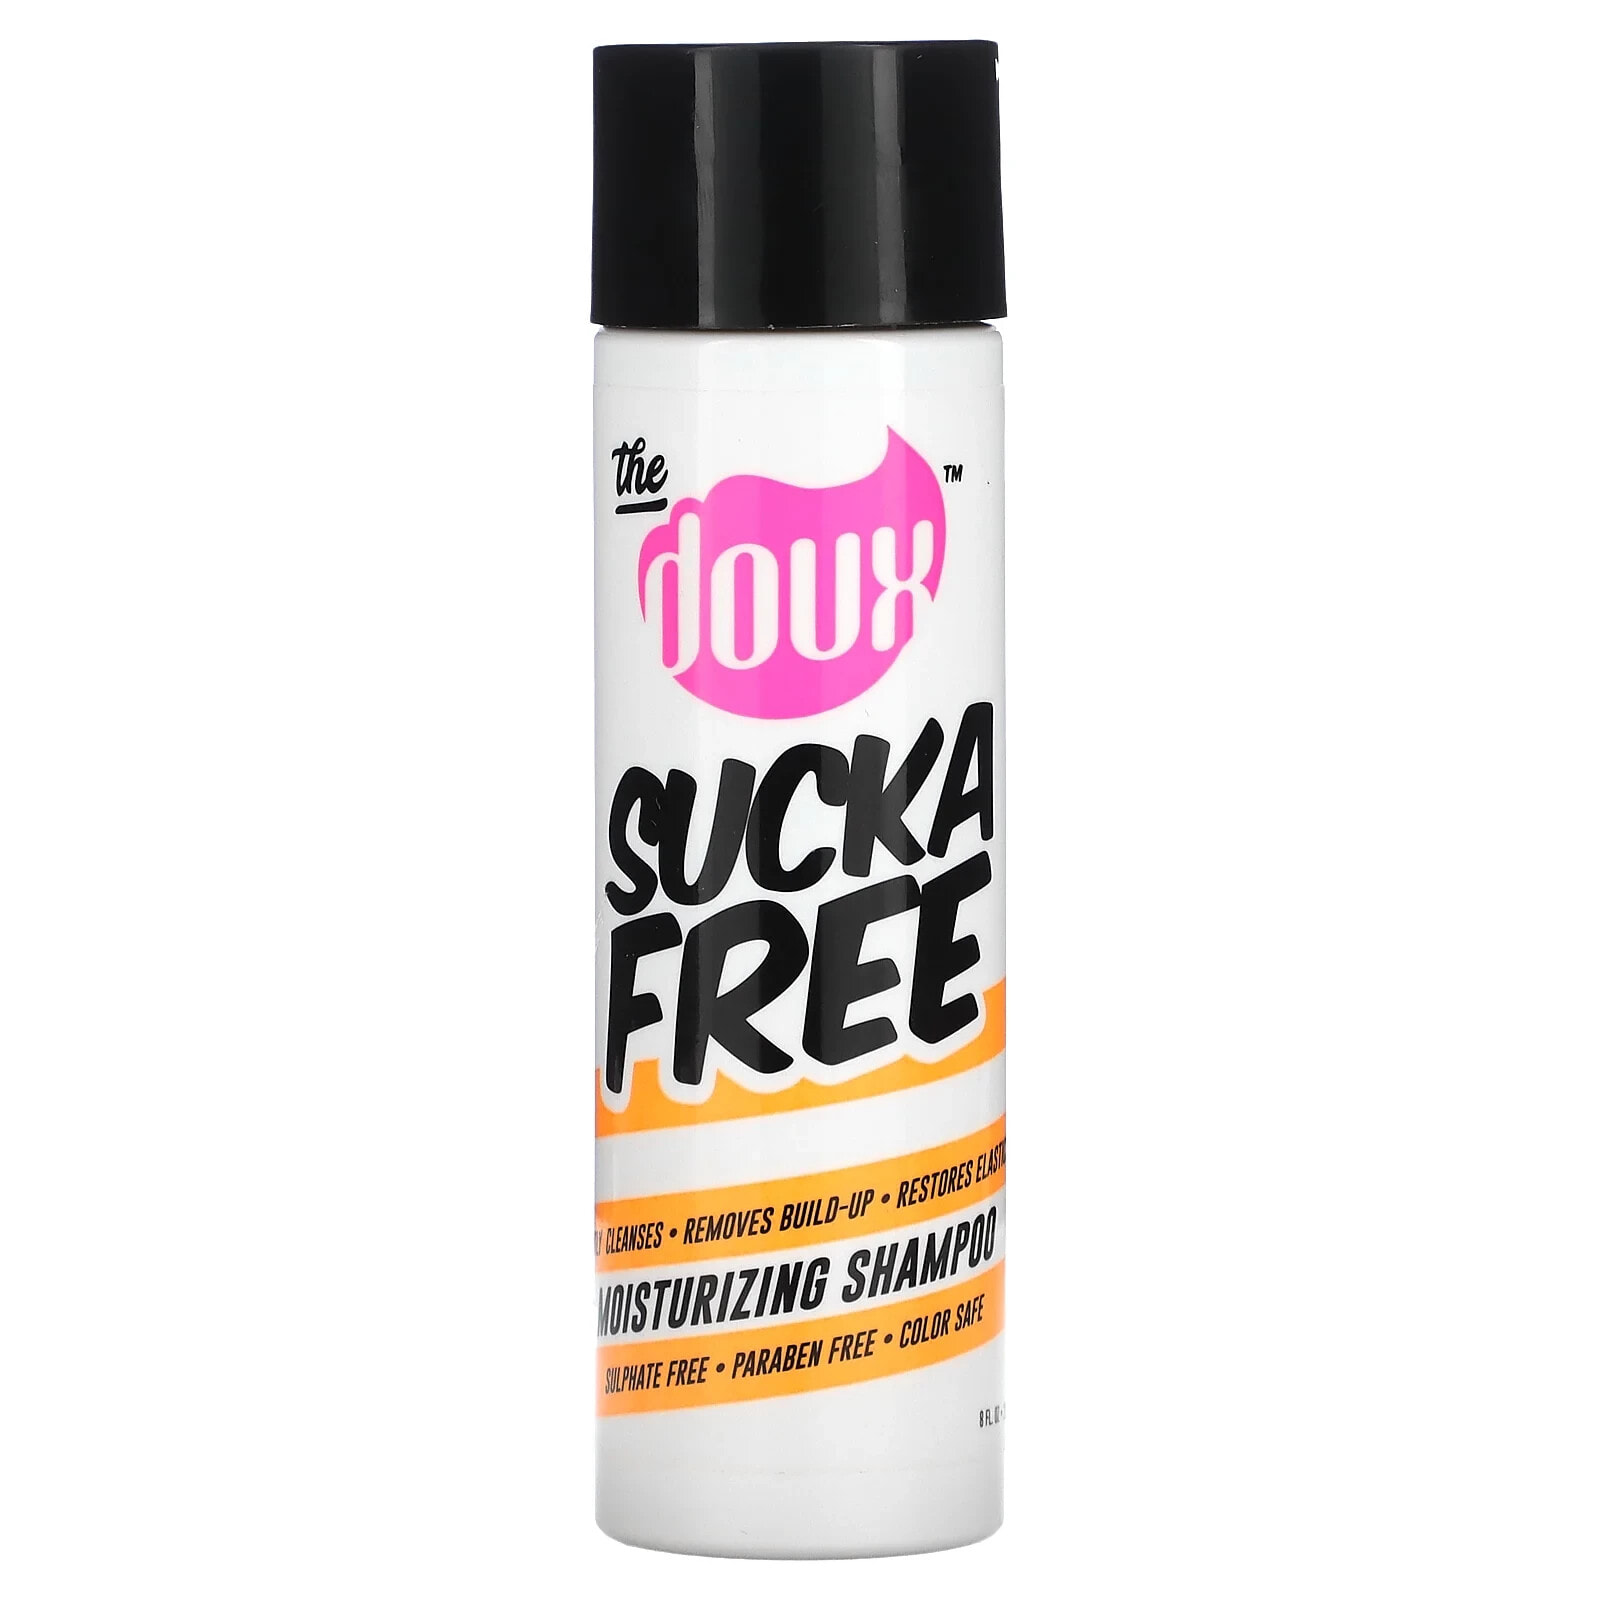 Sucka Free, Moisturizing Shampoo, 8 fl oz (236 ml)